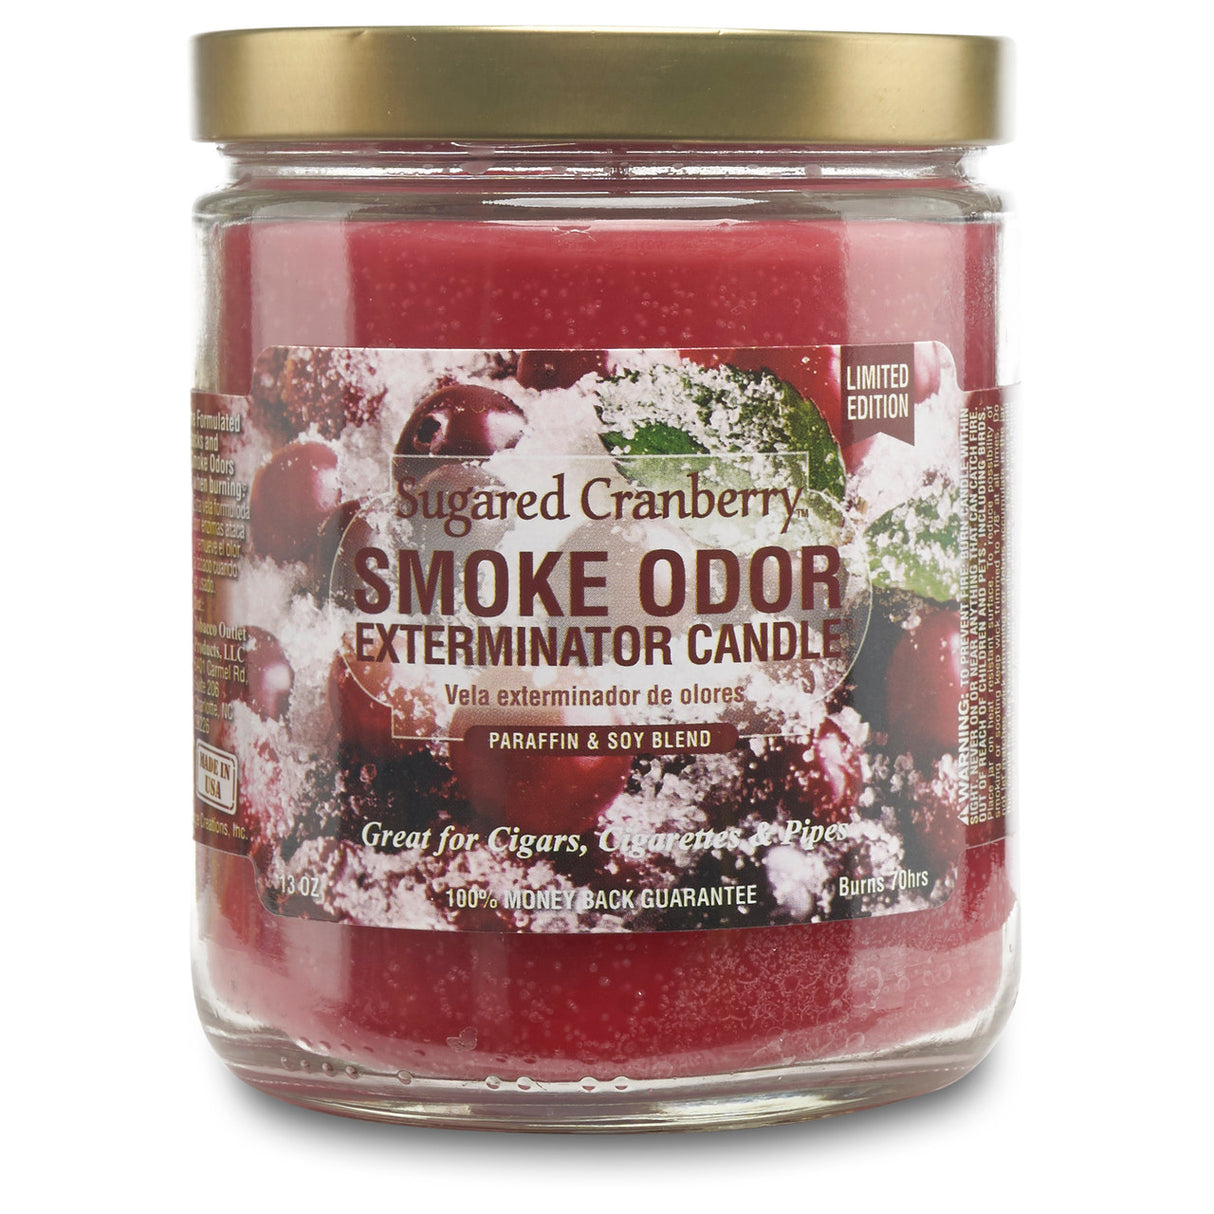 sugared cranberry smoke odor exterminator candle